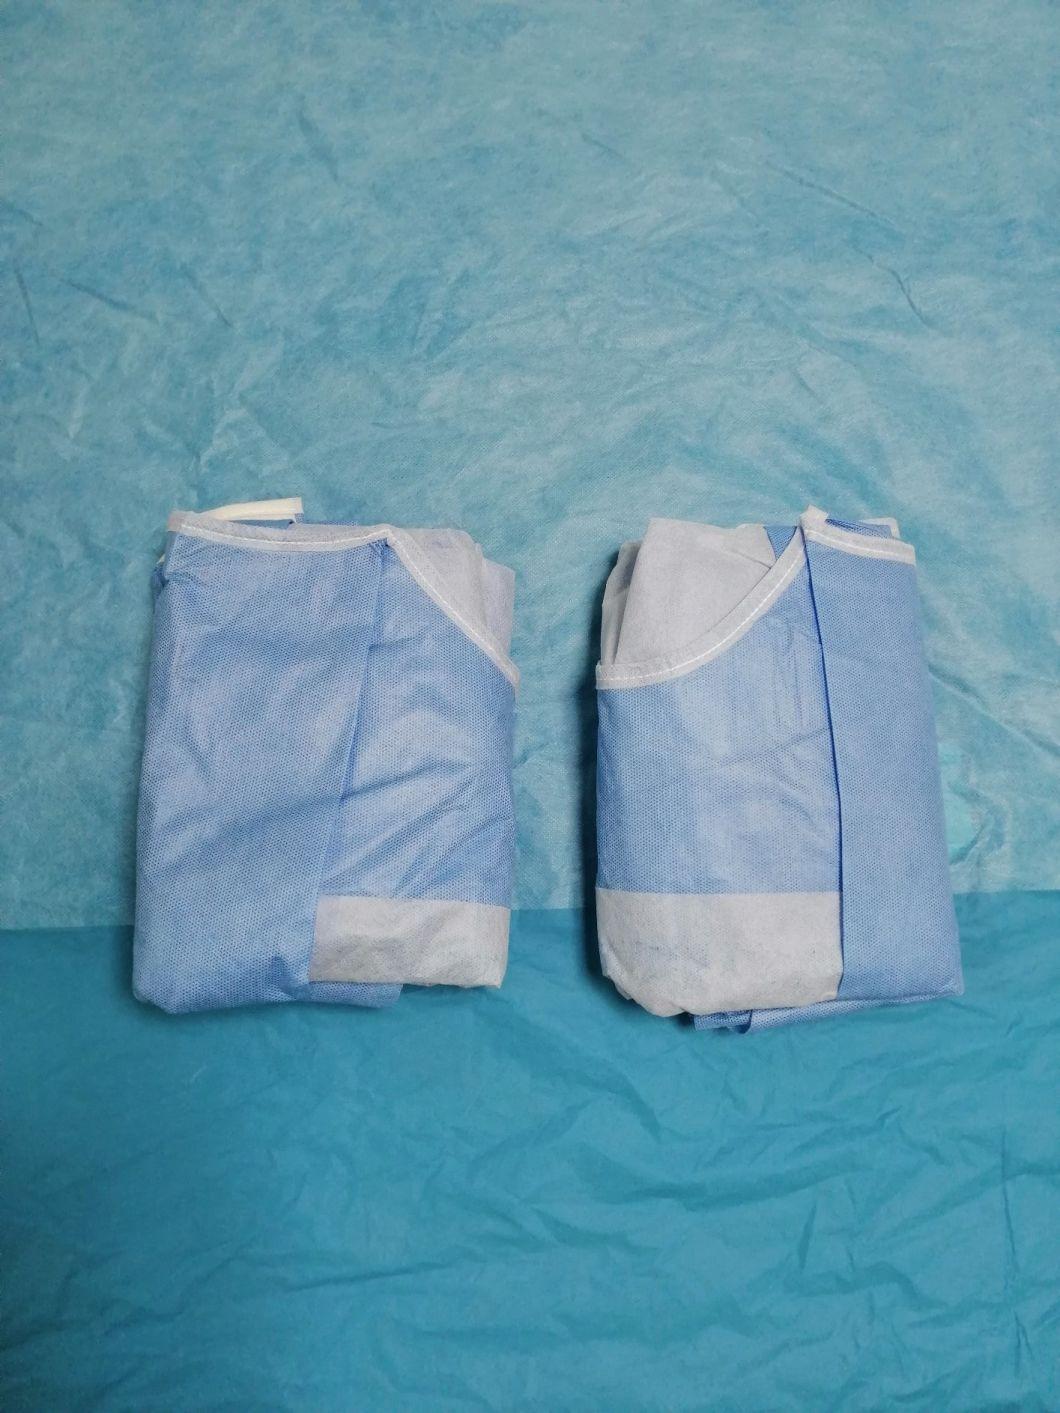 Disposable Sterile Surgical Universal Drape Pack, Drape Set